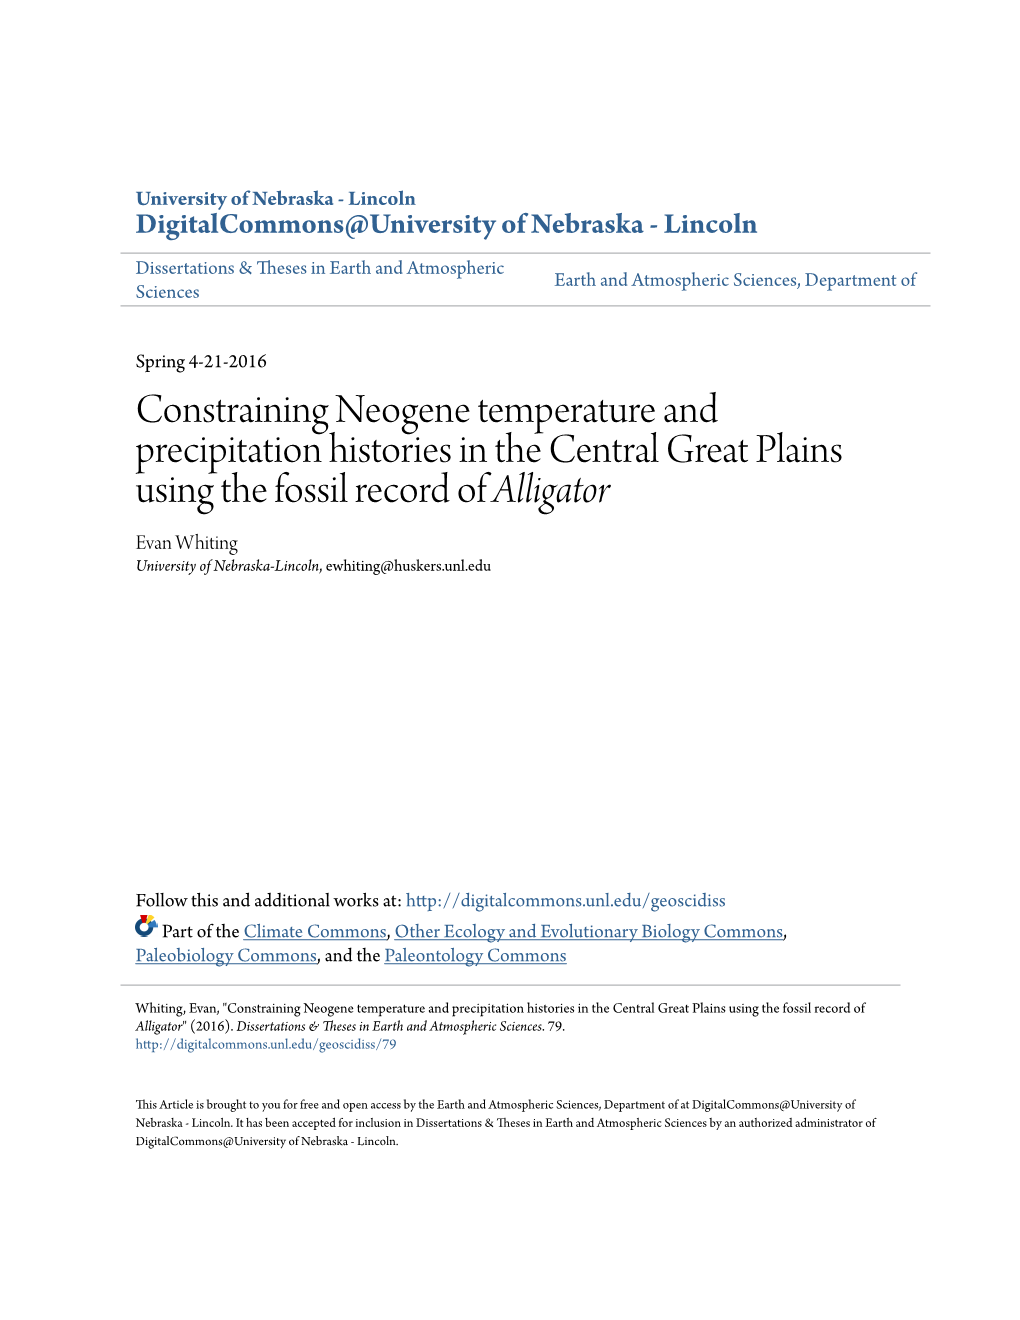 Constraining Neogene Temperature and Precipitation Histories in The